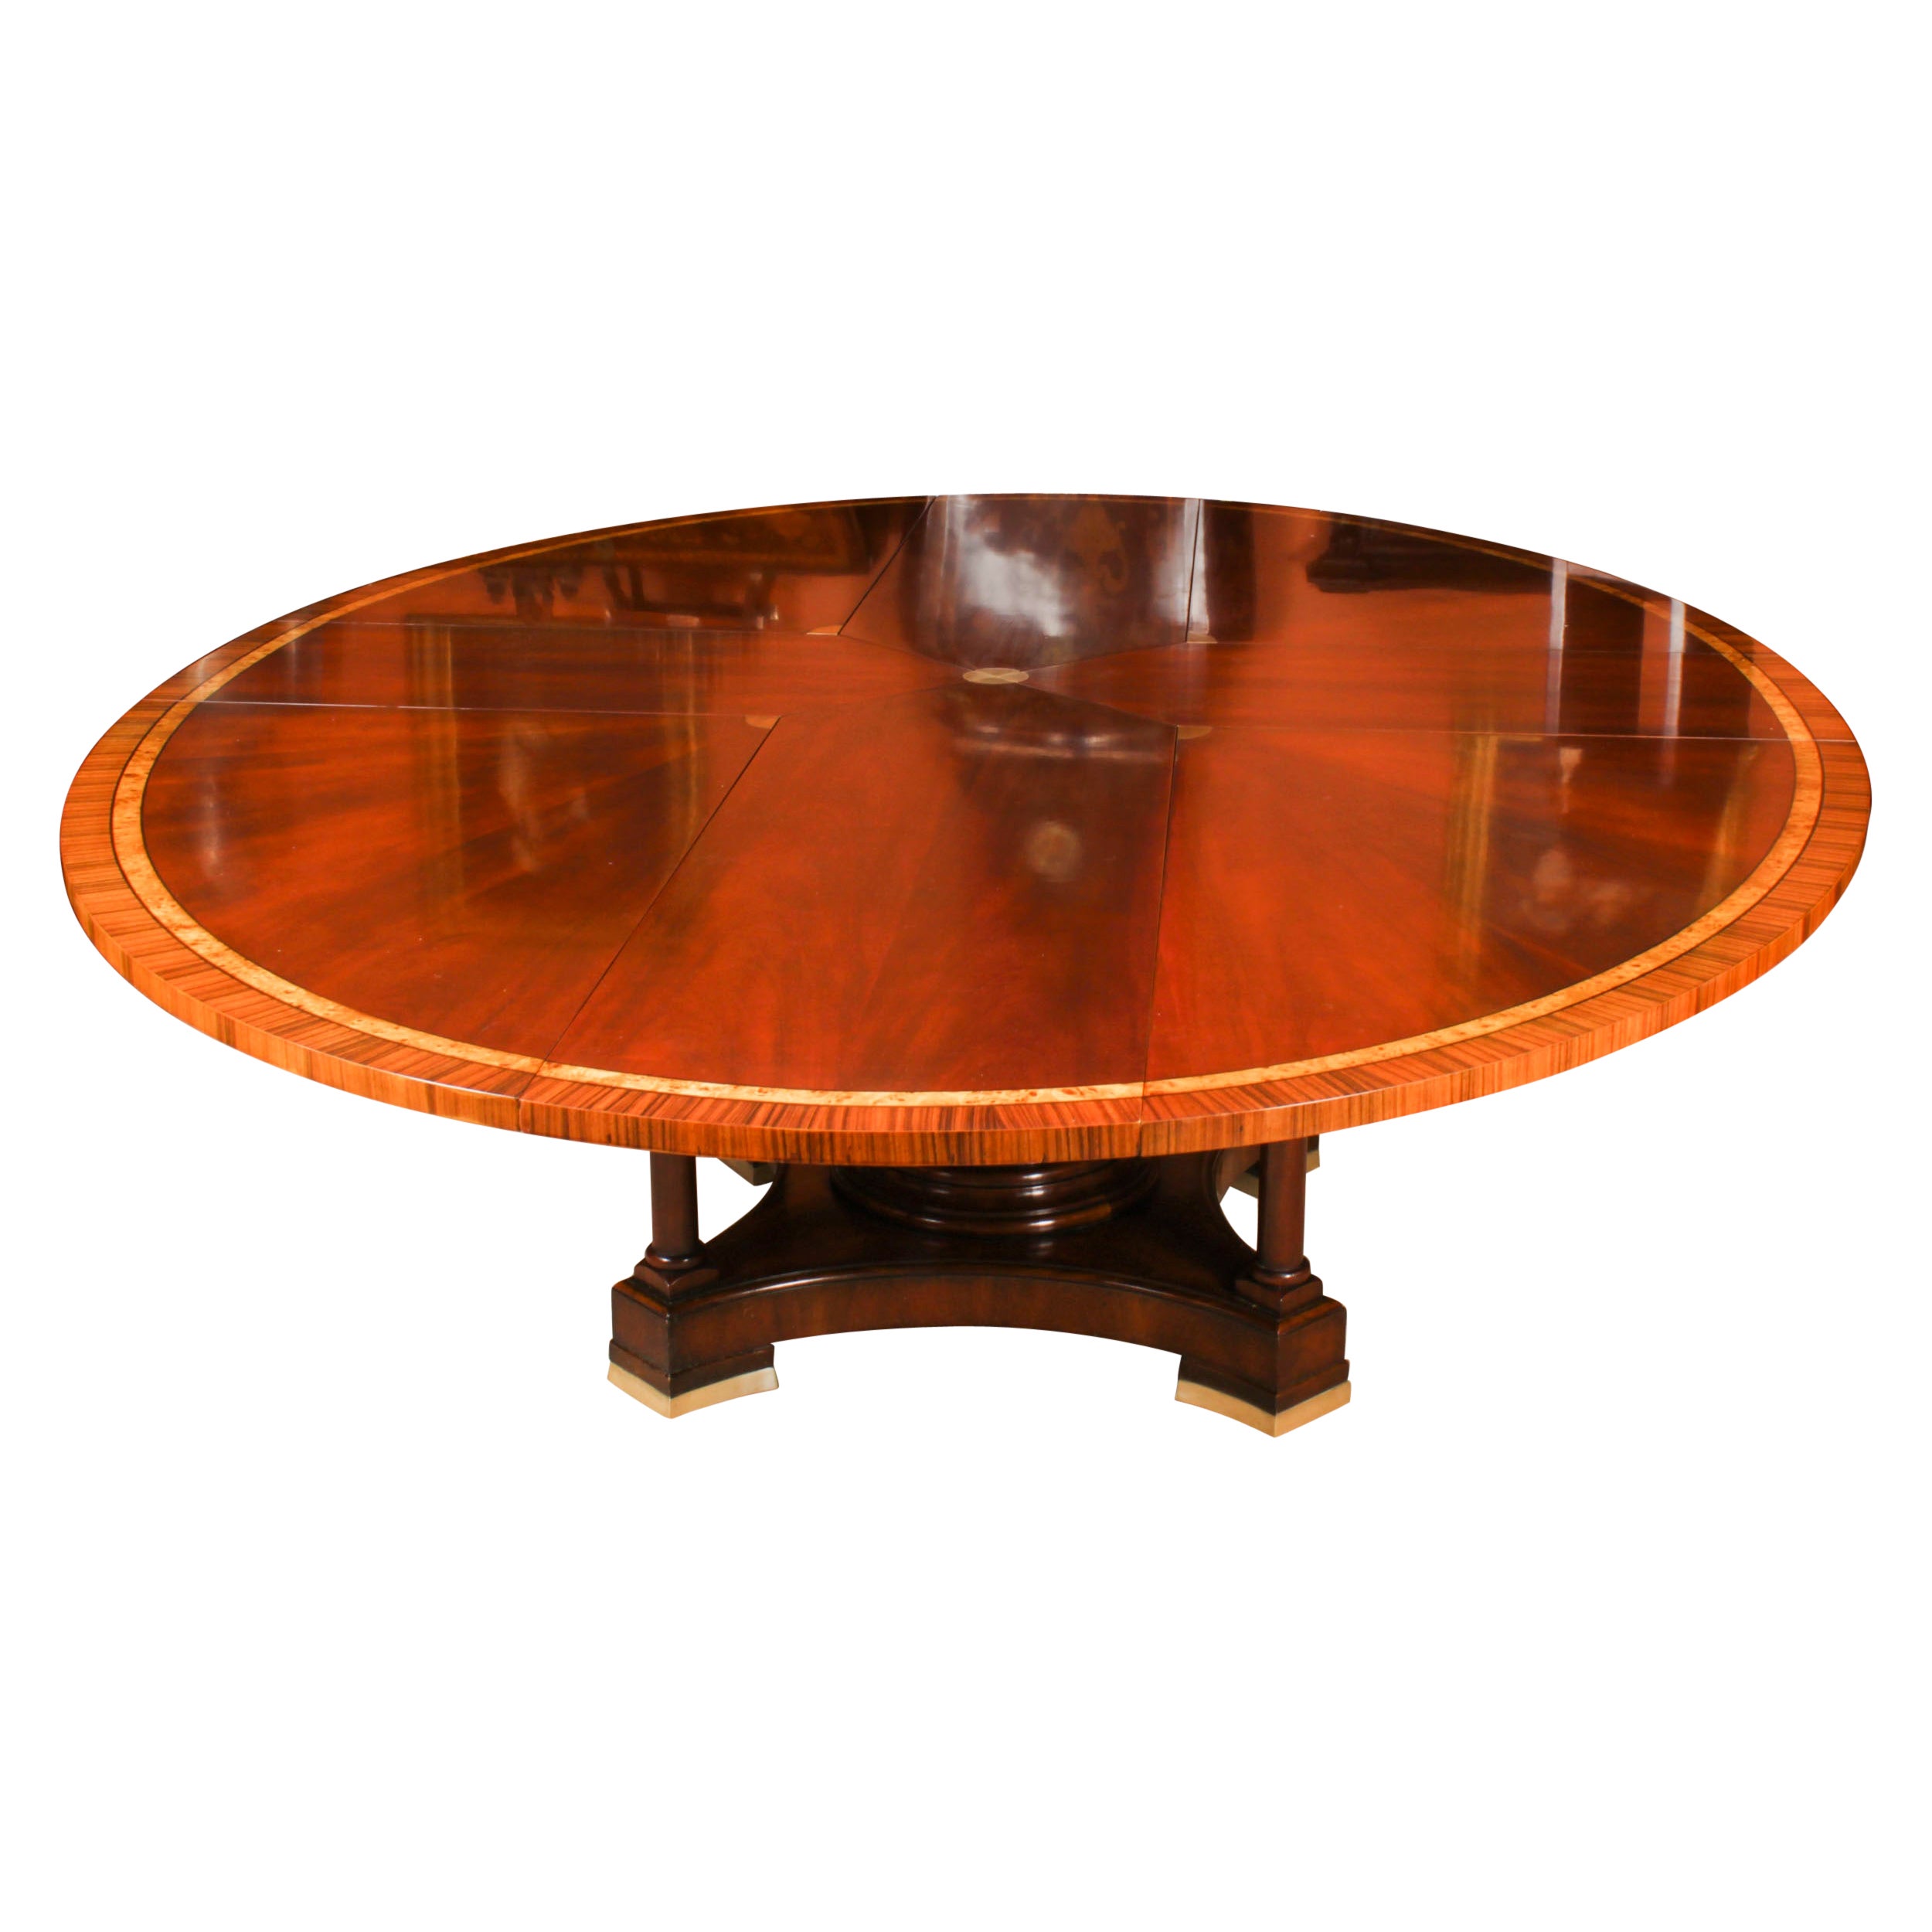 Großer ovaler Vintage-Esstisch aus geflammtem Mahagoni-Jupe, 9 Fuß x 6 Fuß3 Zoll, 20. Jahrhundert im Angebot